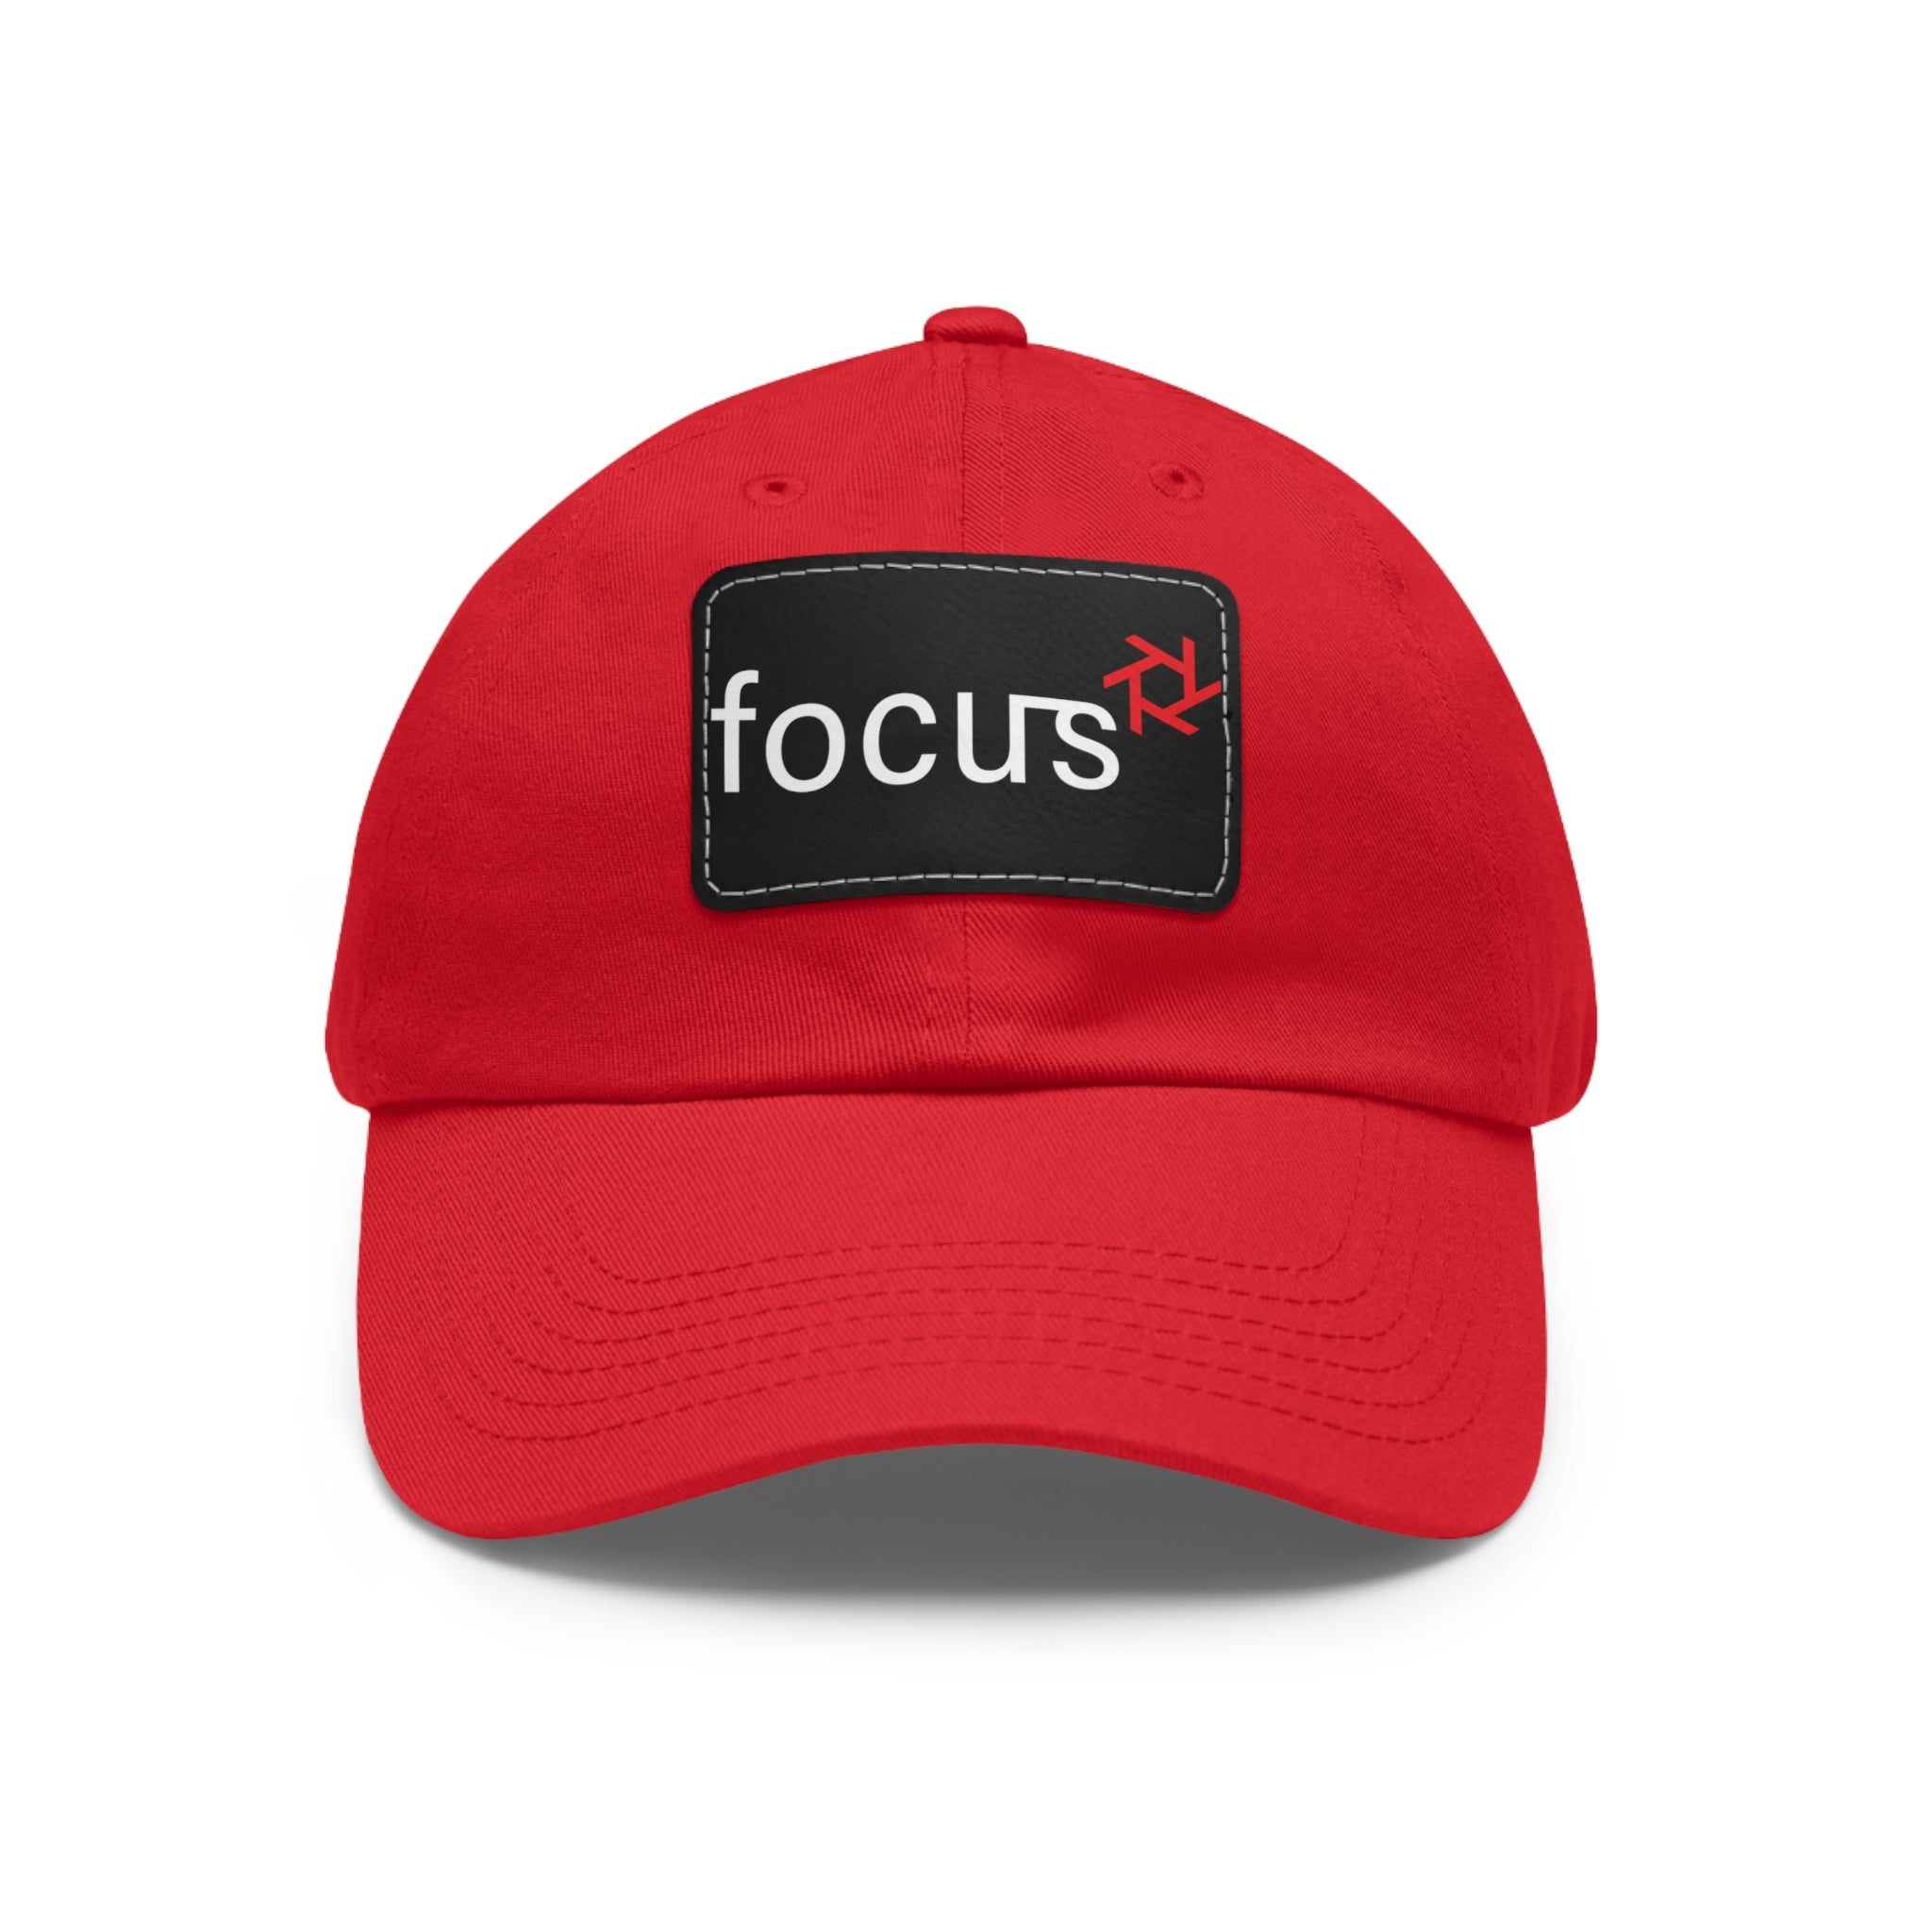 Focus Marketing Group